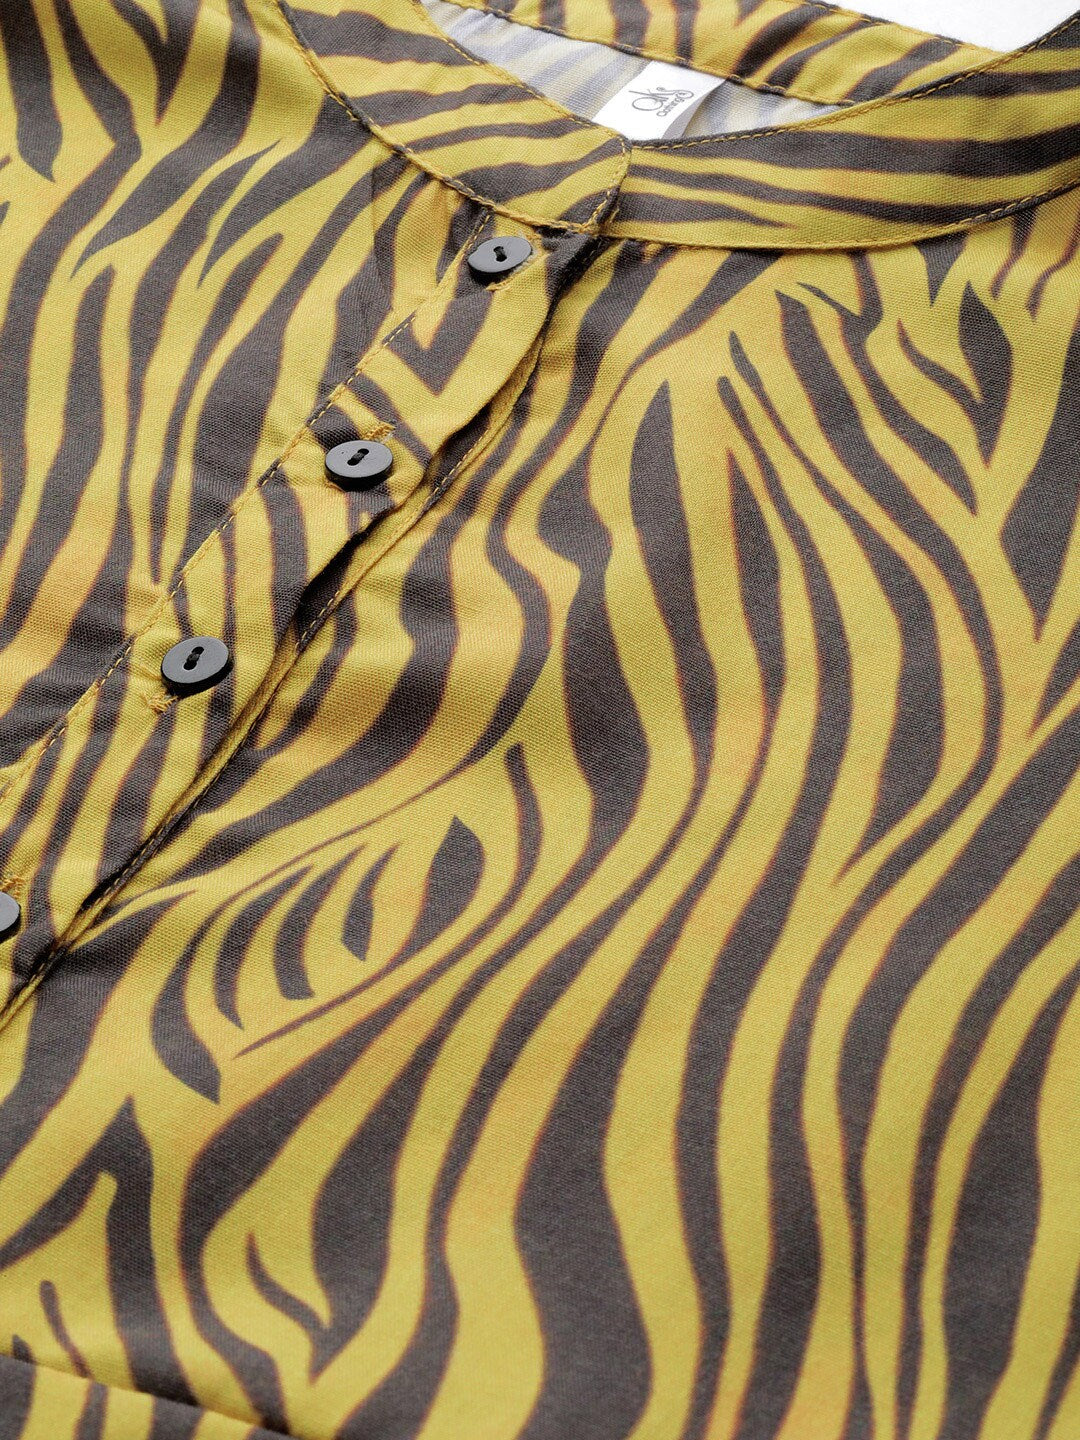 Yellow Zebra Print Dress